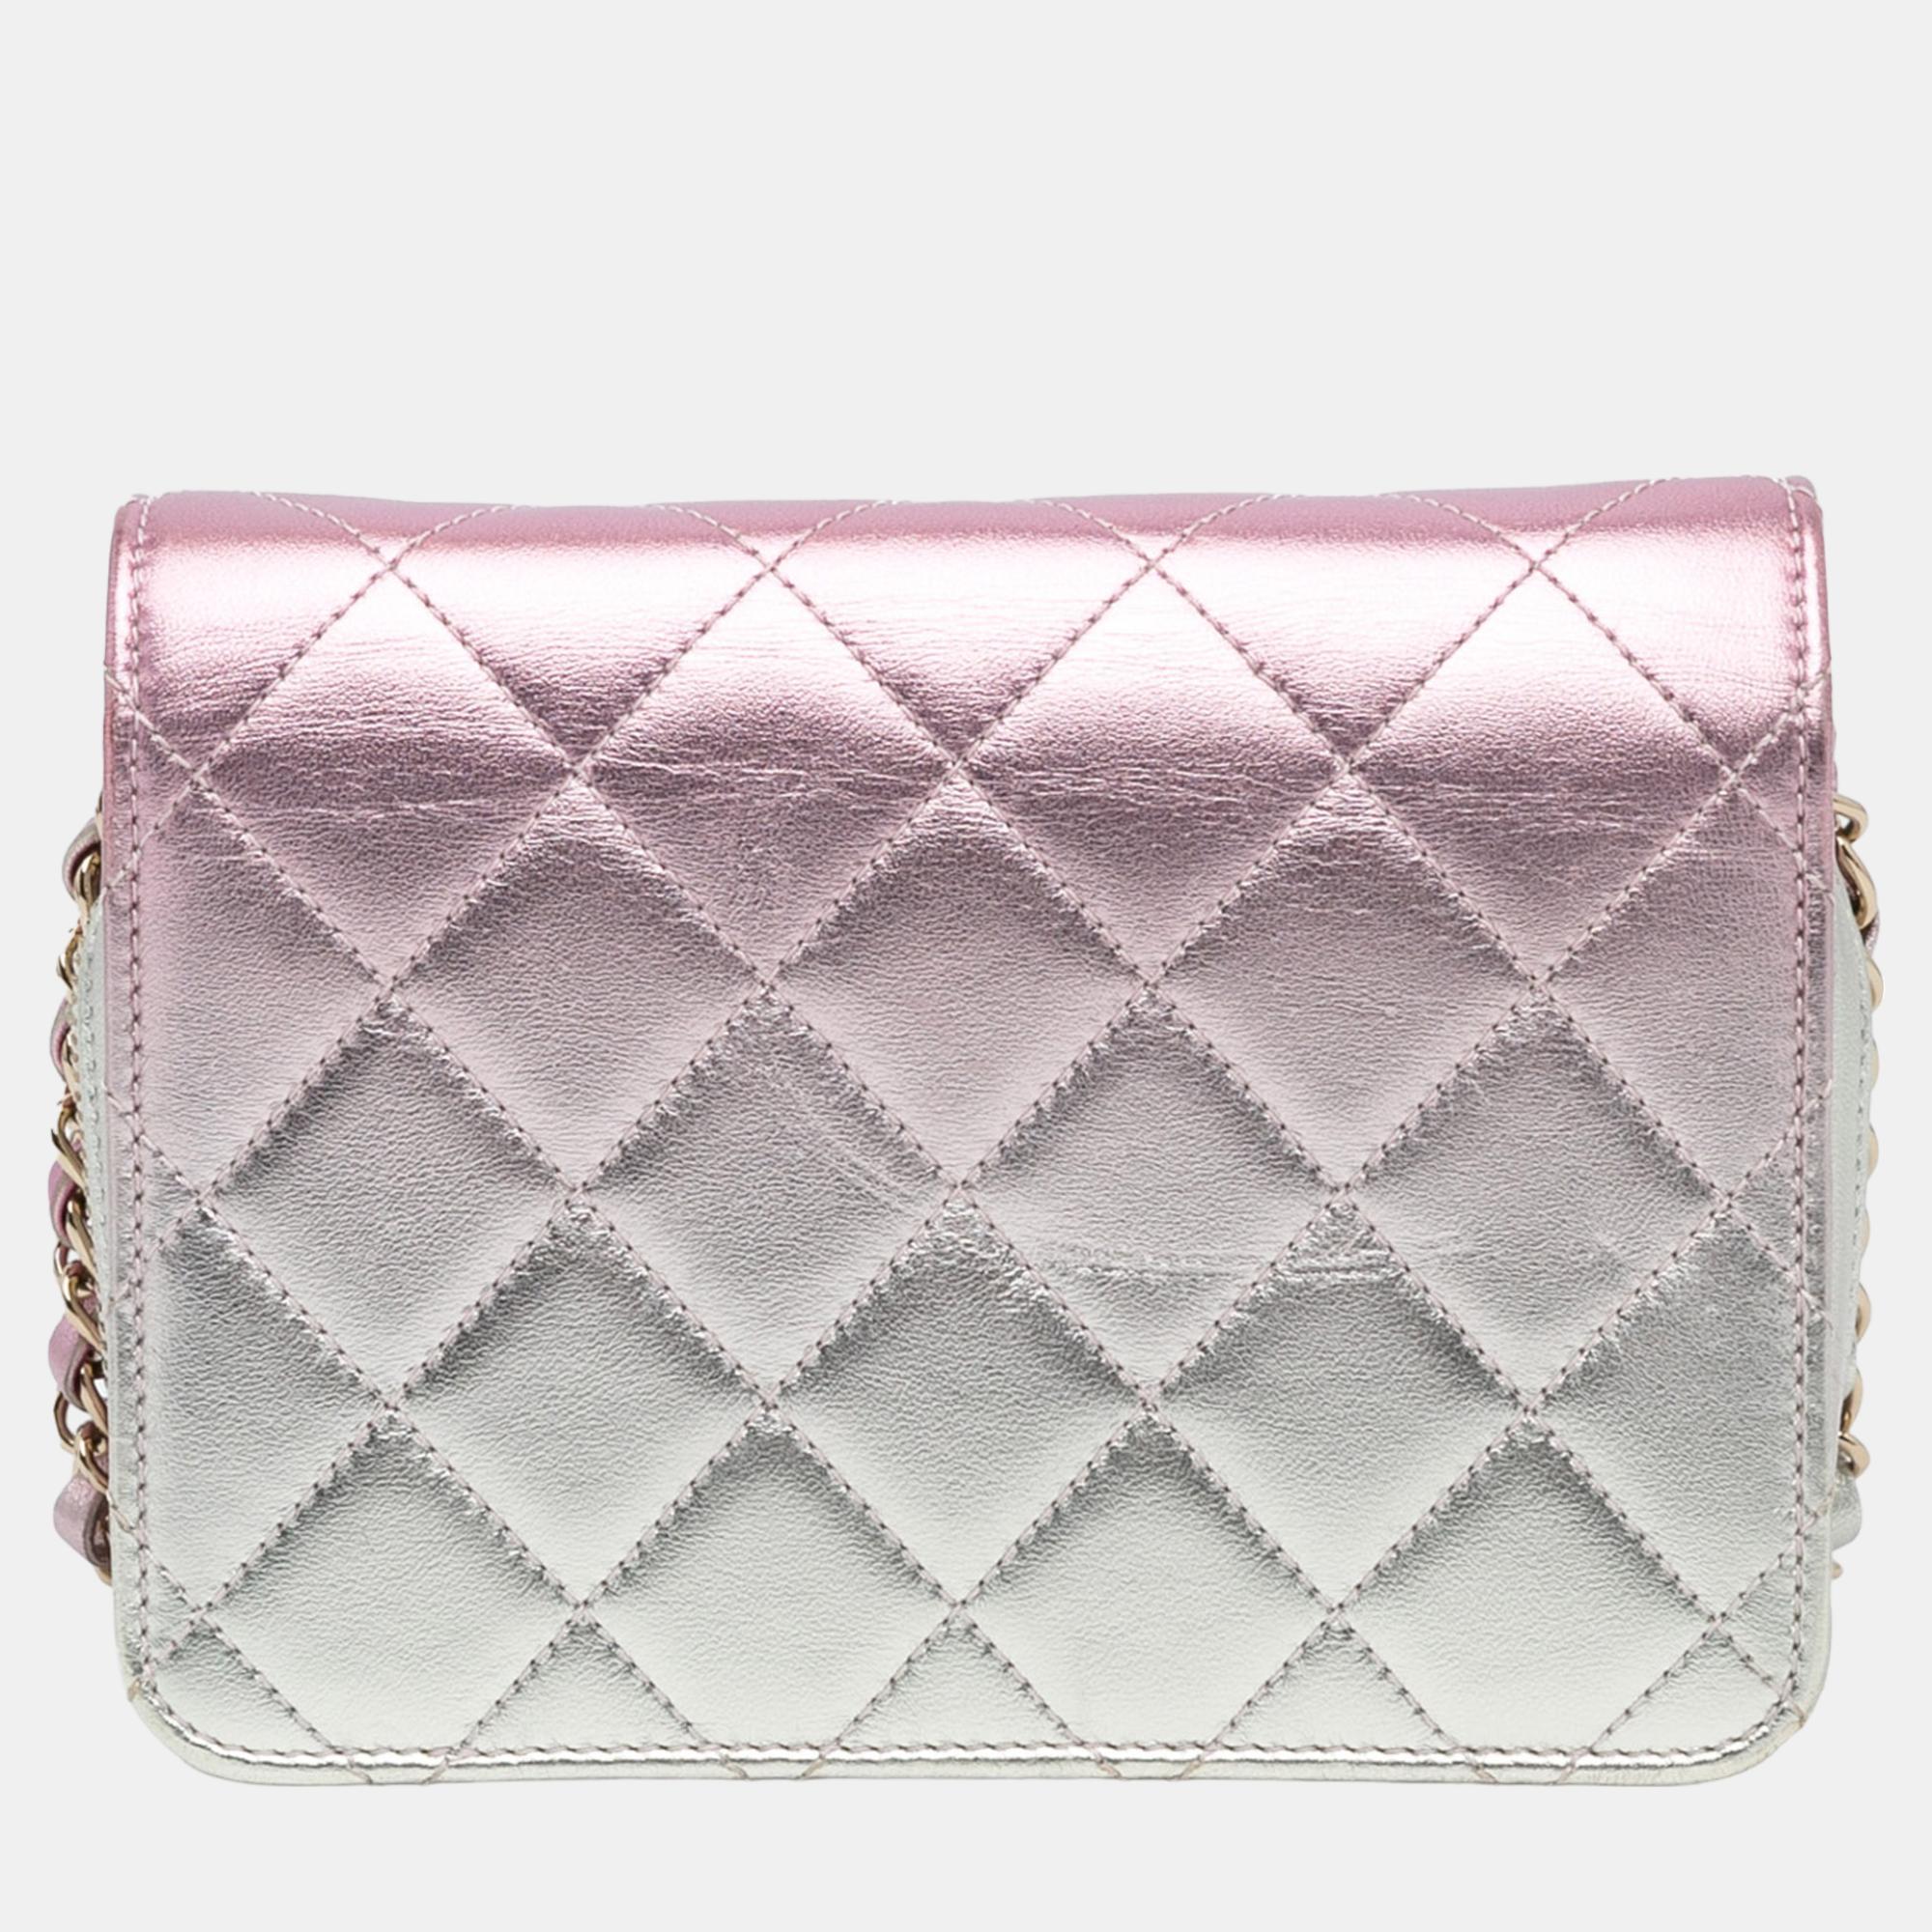 Chanel Pink Mini Metallic Like A Wallet Flap Bag